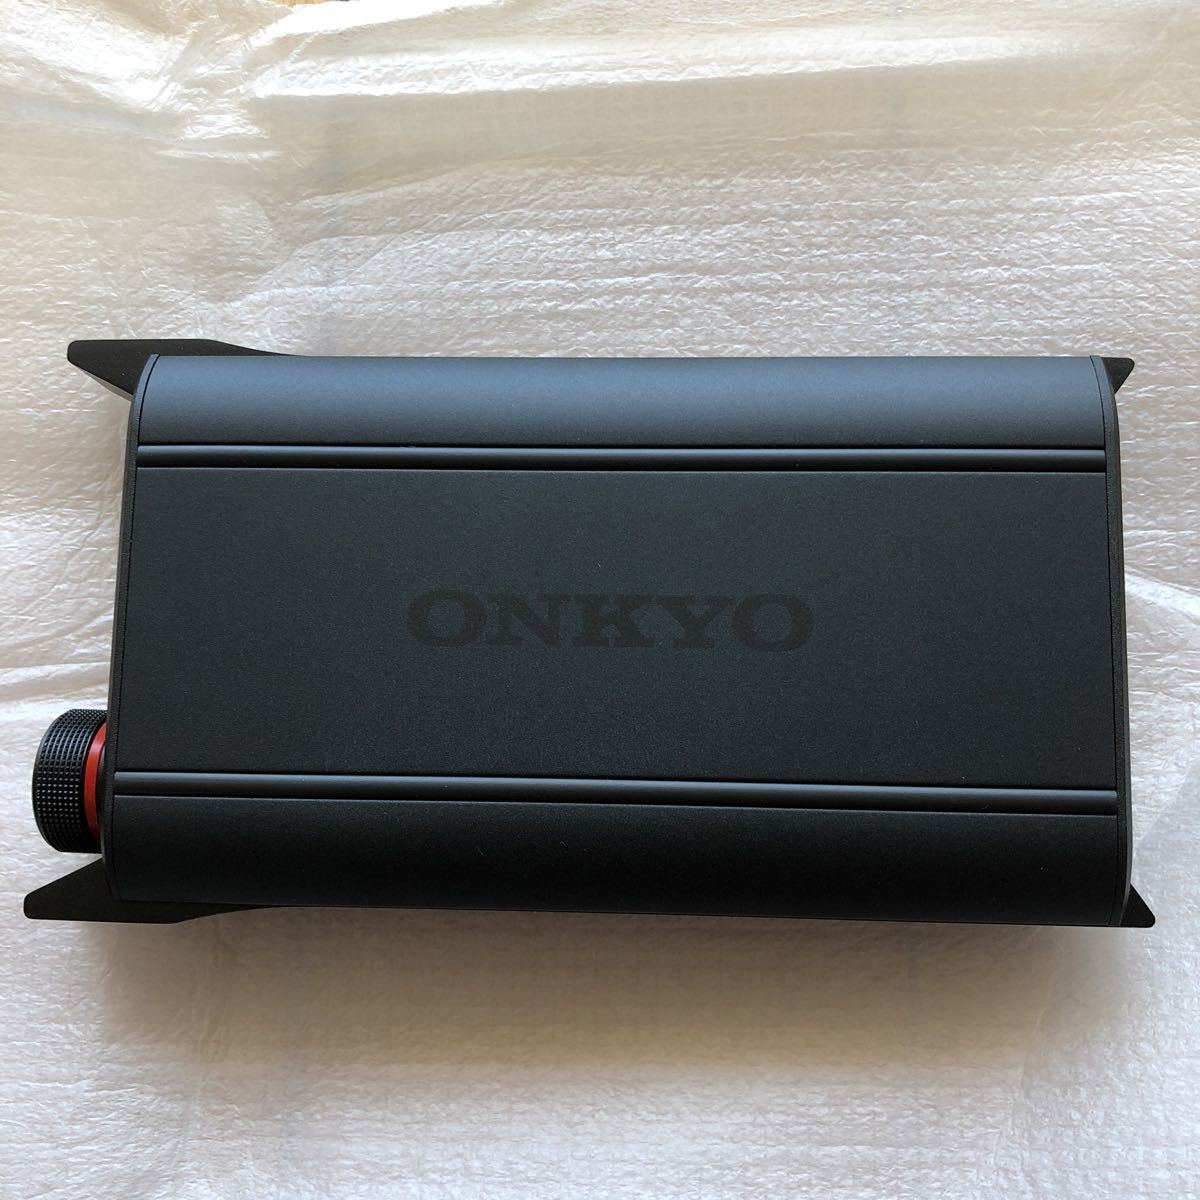 ONKYO DAC-HA 200耳機放大器 原文:ONKYO DAC-HA200 ヘッドホンアンプ